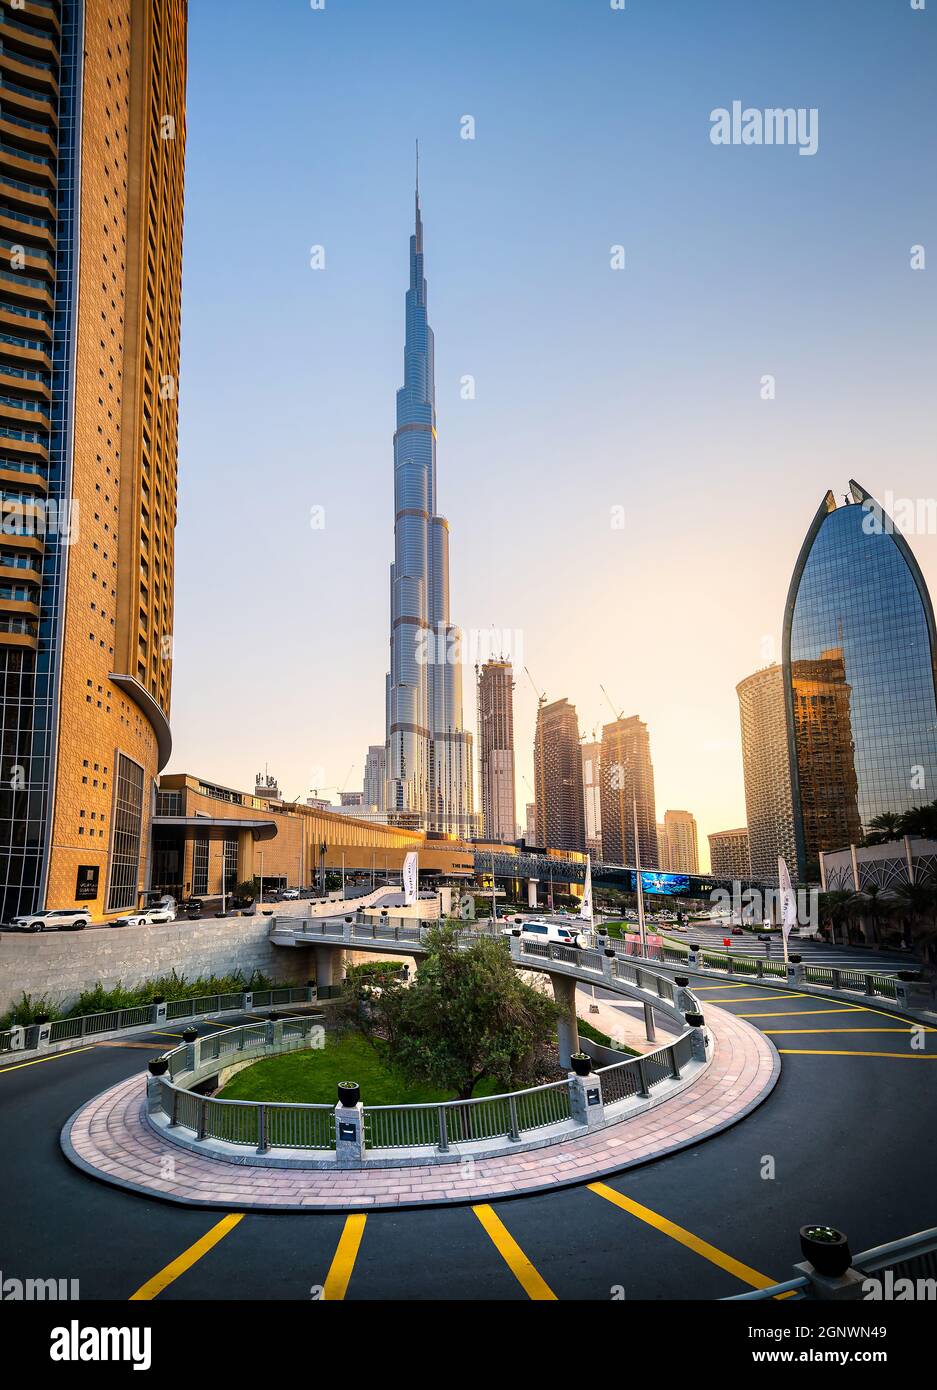 Dubai, United Arab Emirates - April 19, 2021: Dubai mall and Burj Khalifa modern architecture and downtown city streets area streets at scenic sunset Stock Photo